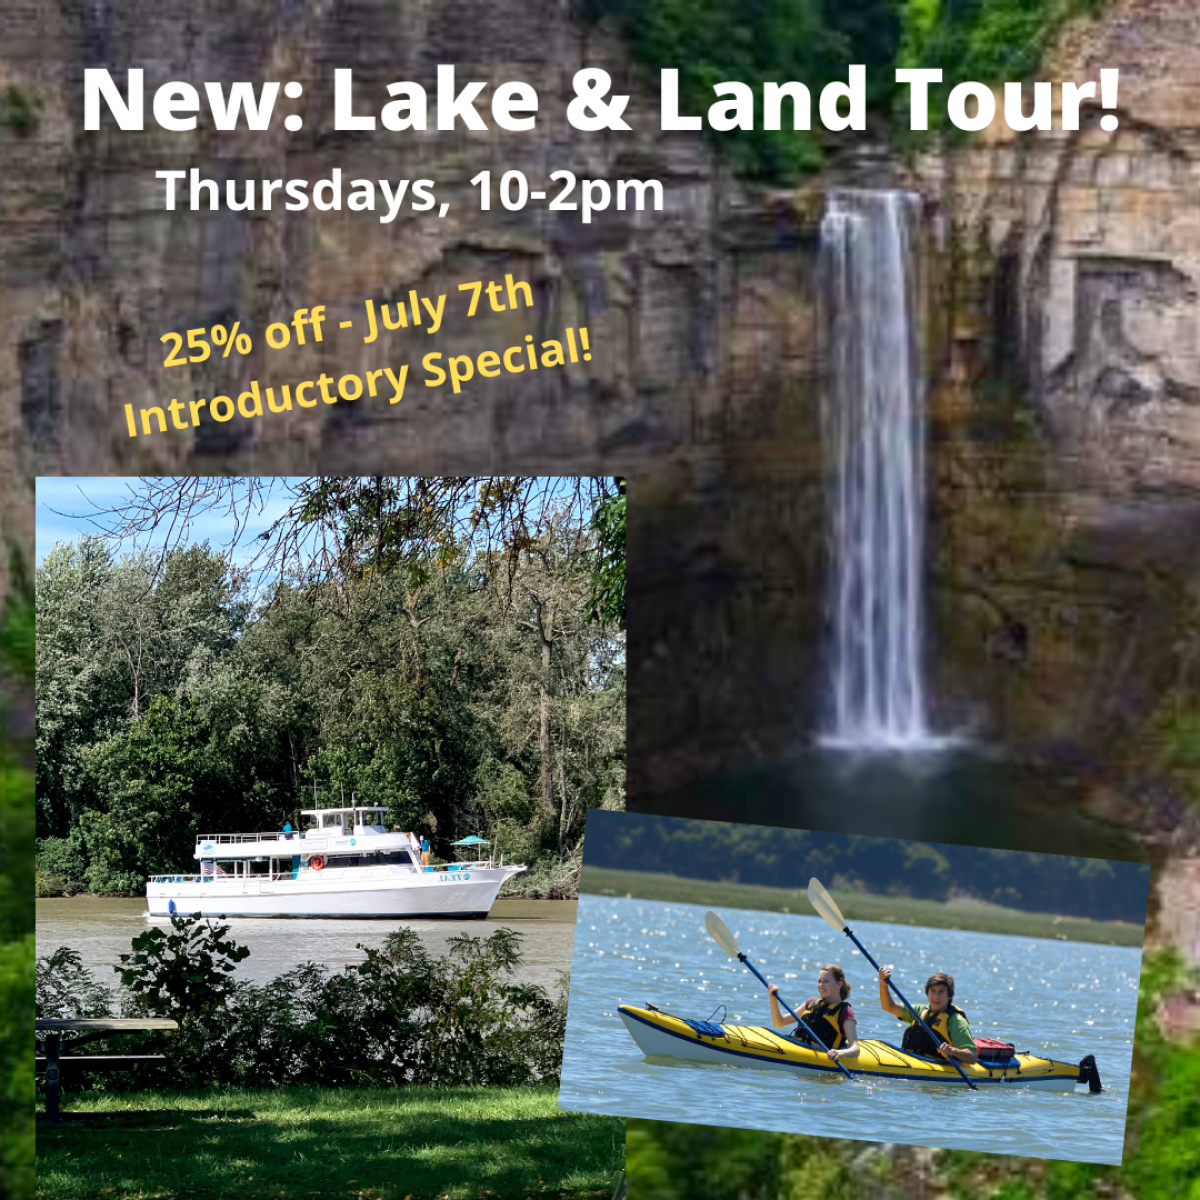 Take a Lake & Land Tour with Discover Cayuga Lake Boat Tours